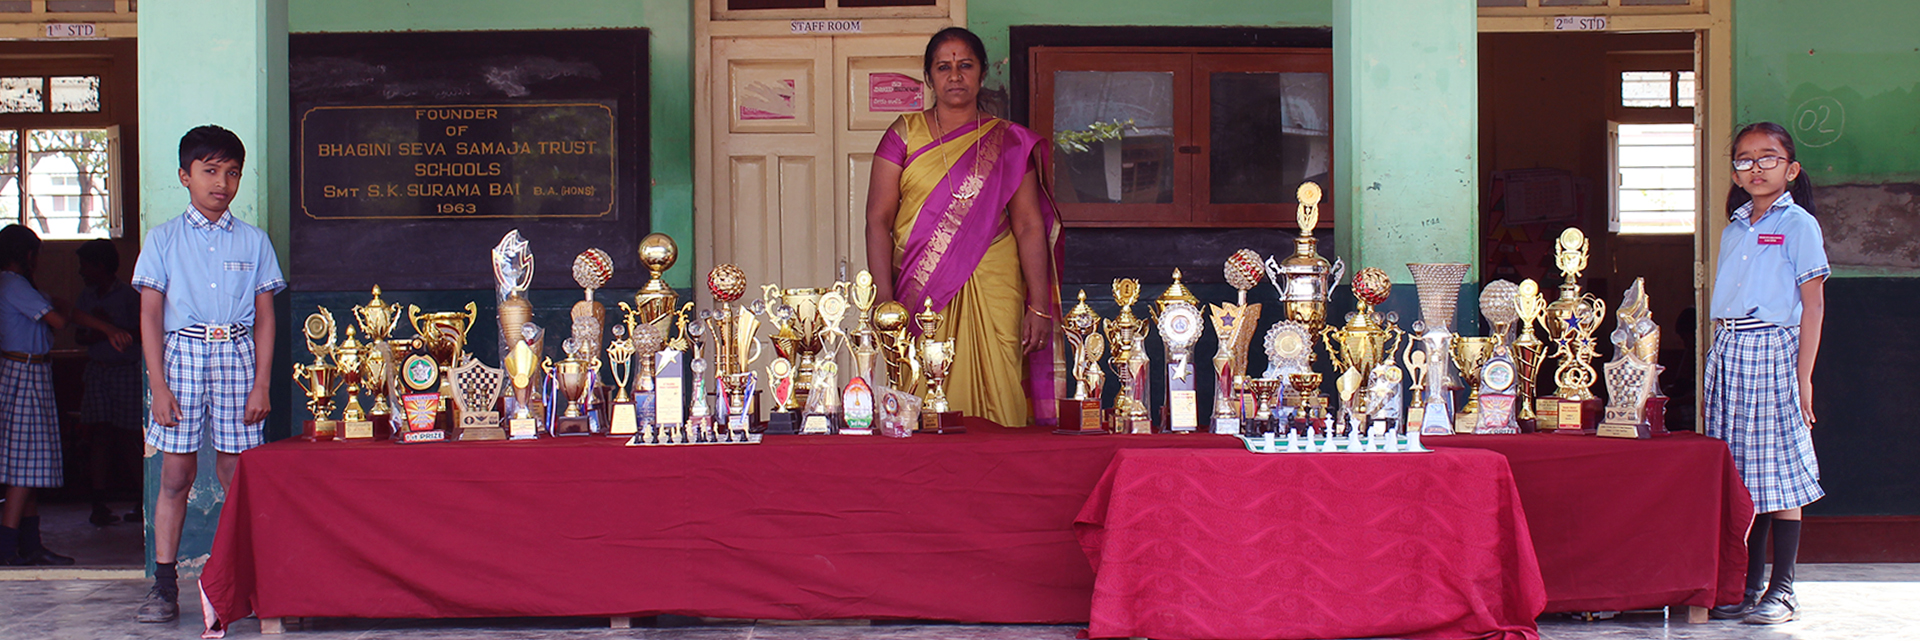 Bagini Seva Samaja - Achievements Banner